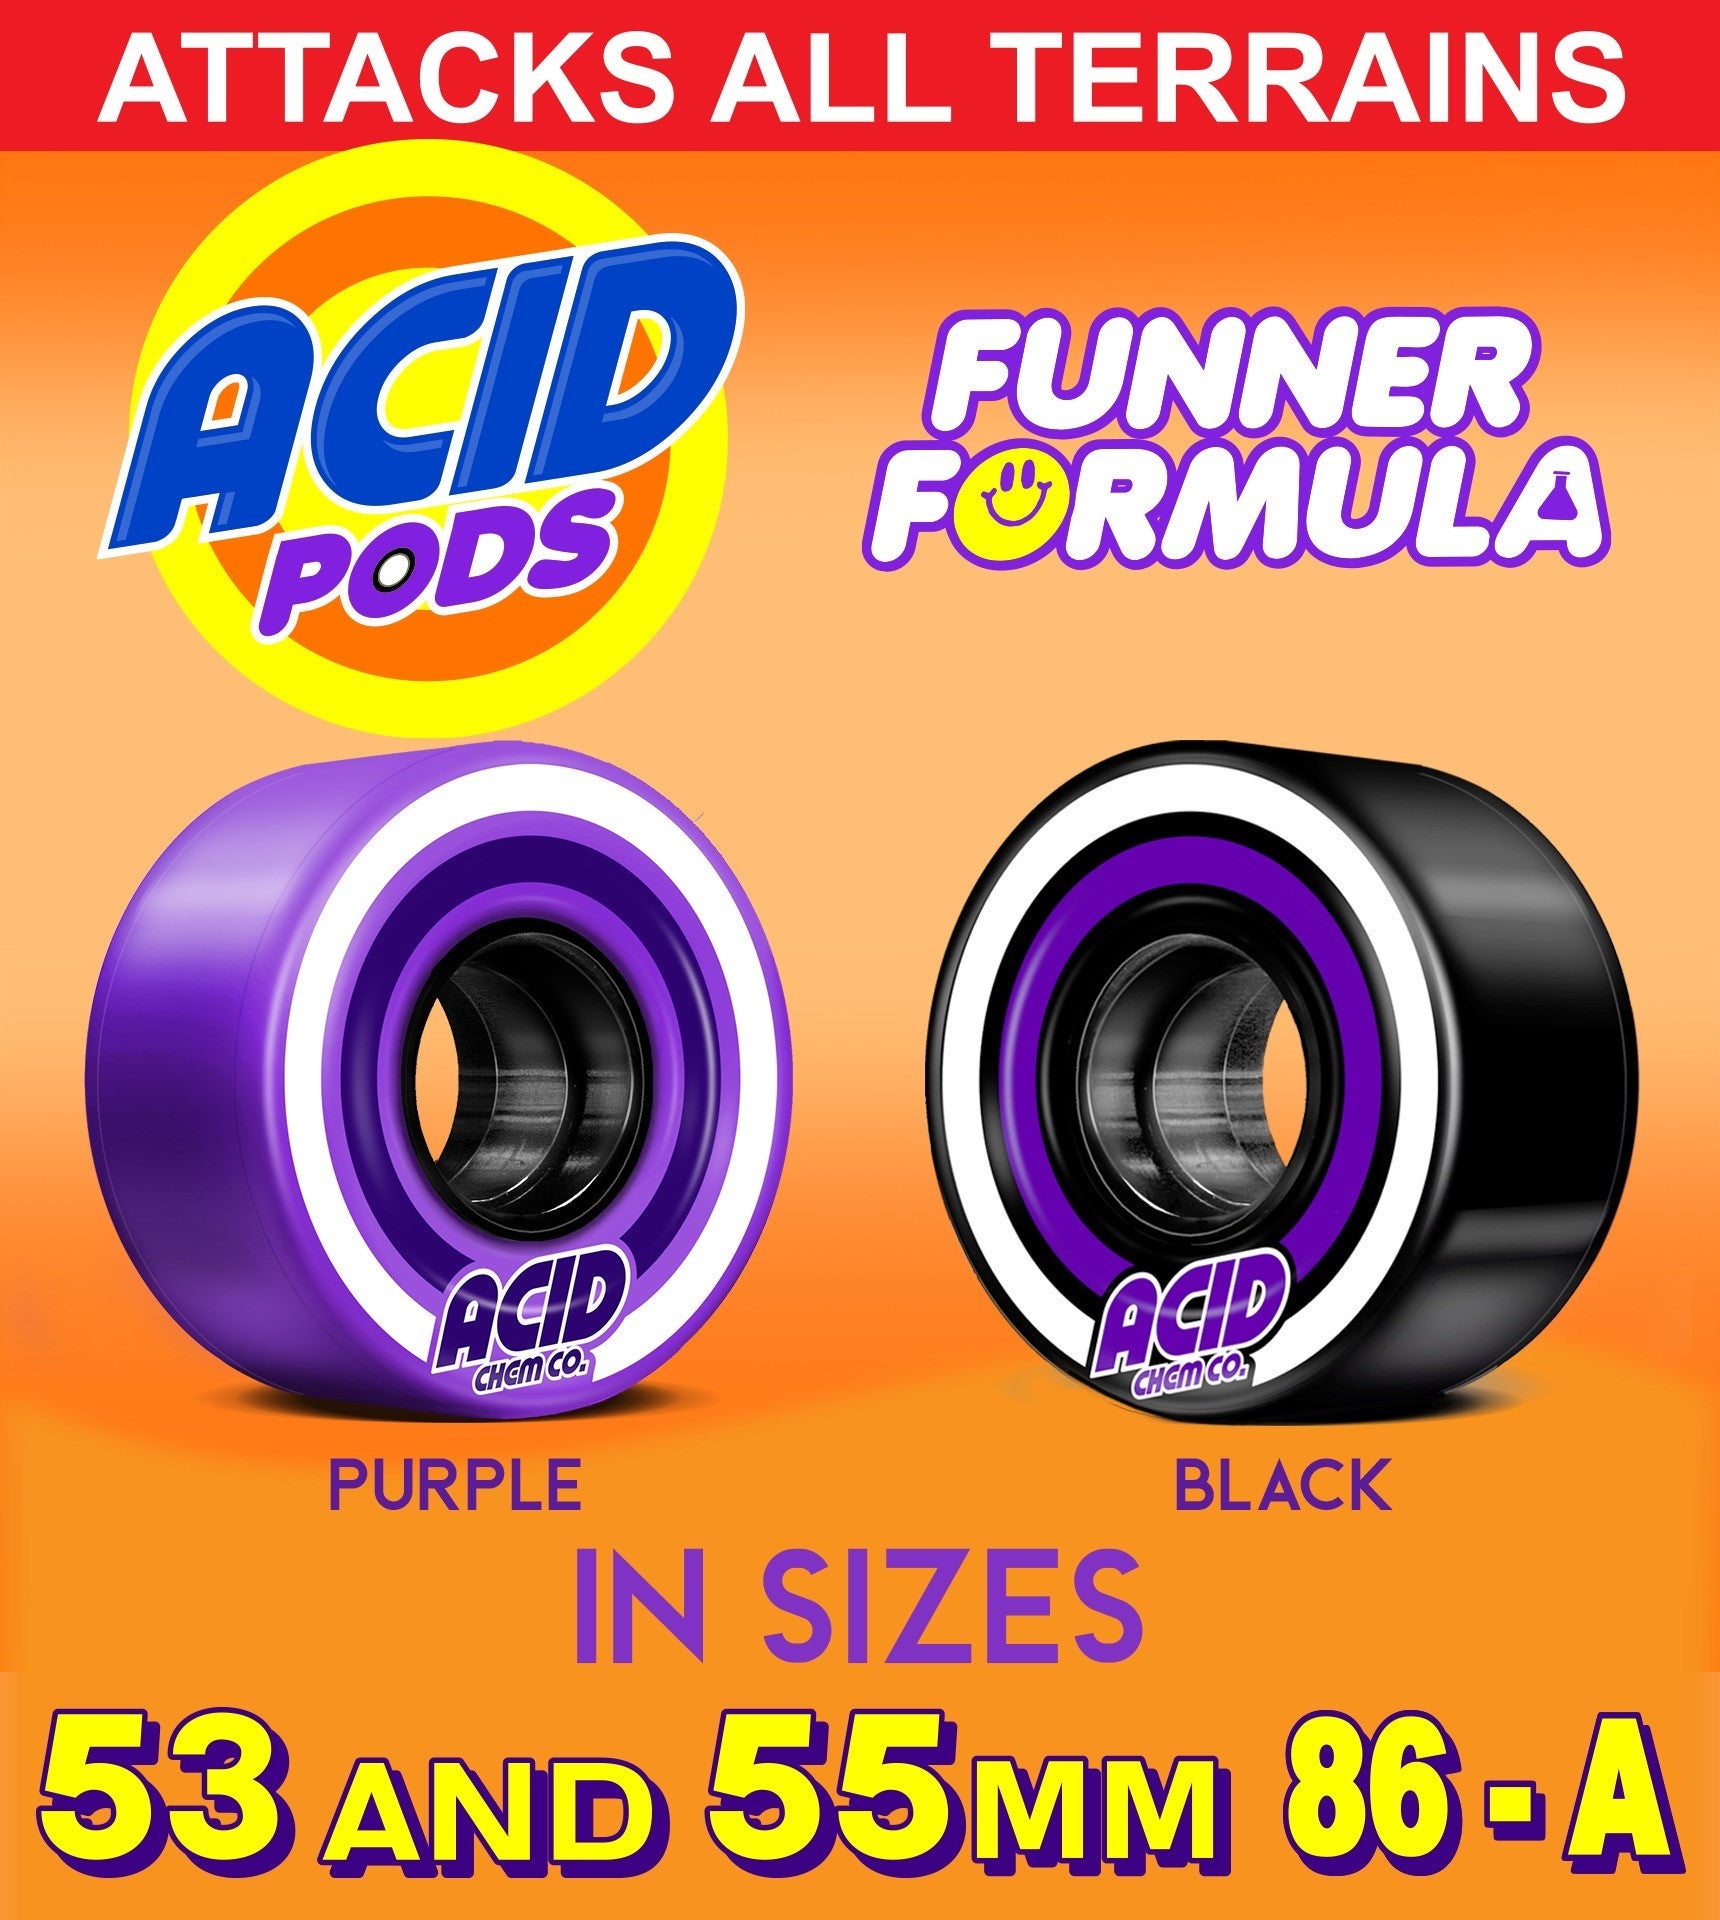 Black & Purple Pods out now!